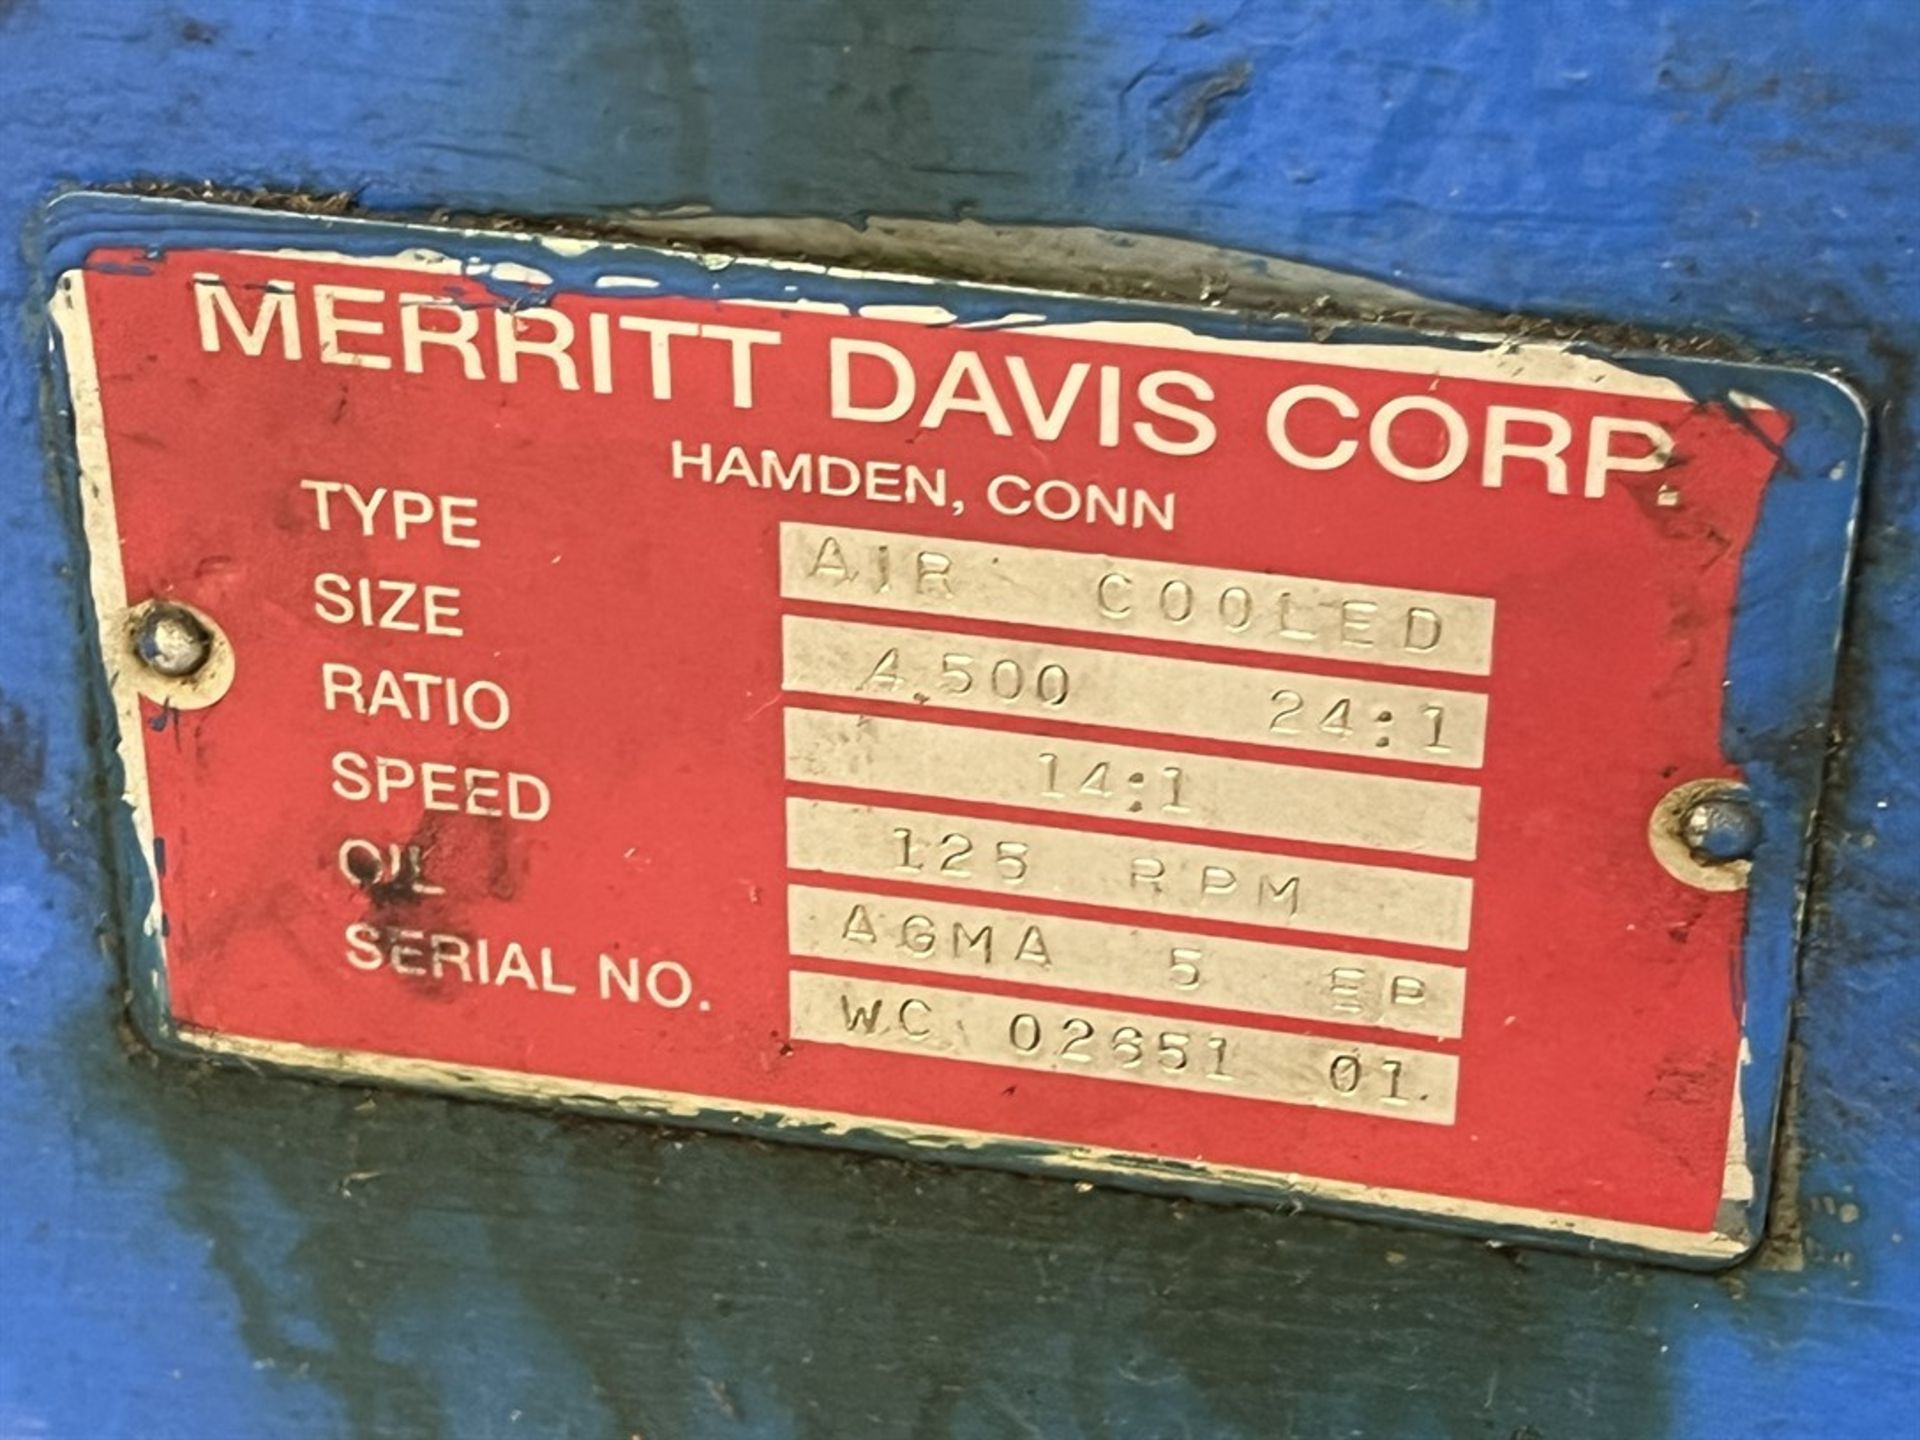 MERRITT DAVIS 4.5” 24:1 L/D Extruder, s/n WC02651-01, Screw, 14:1 Gearbox Ratio, US 200HP DC - Image 7 of 7